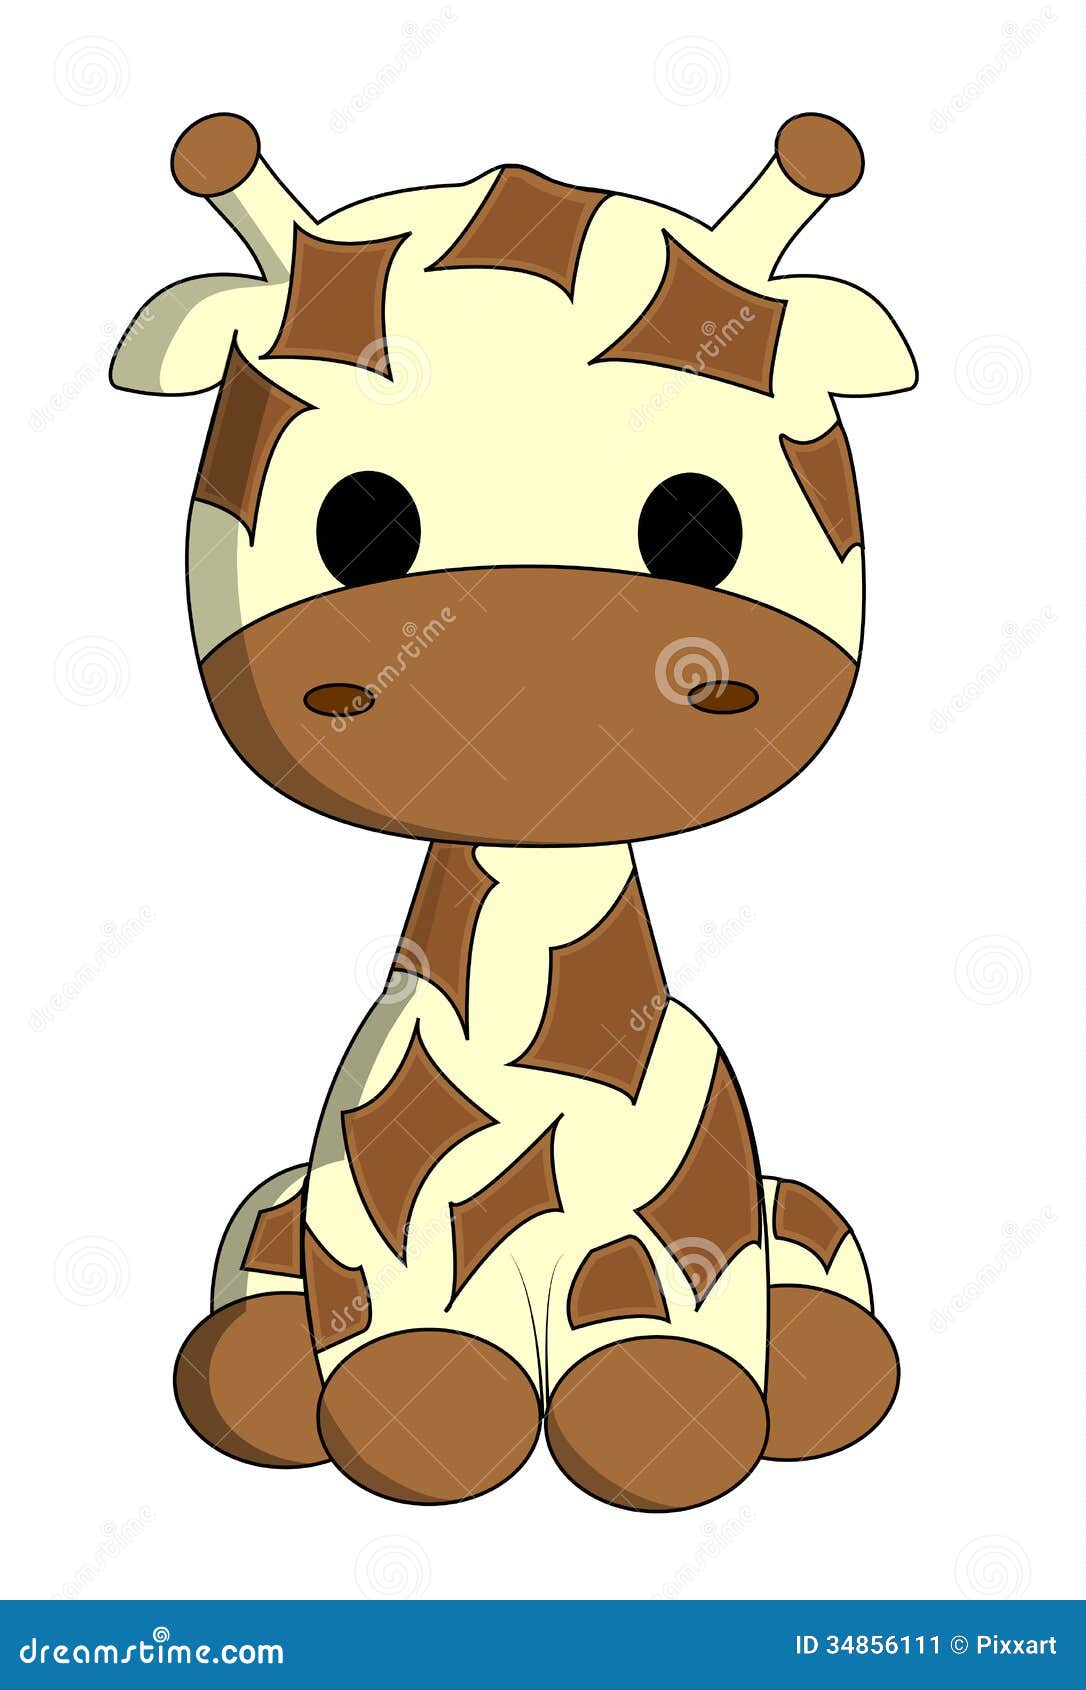 Cute giraffe cartoon stock vector. Image of happiness - 34856111